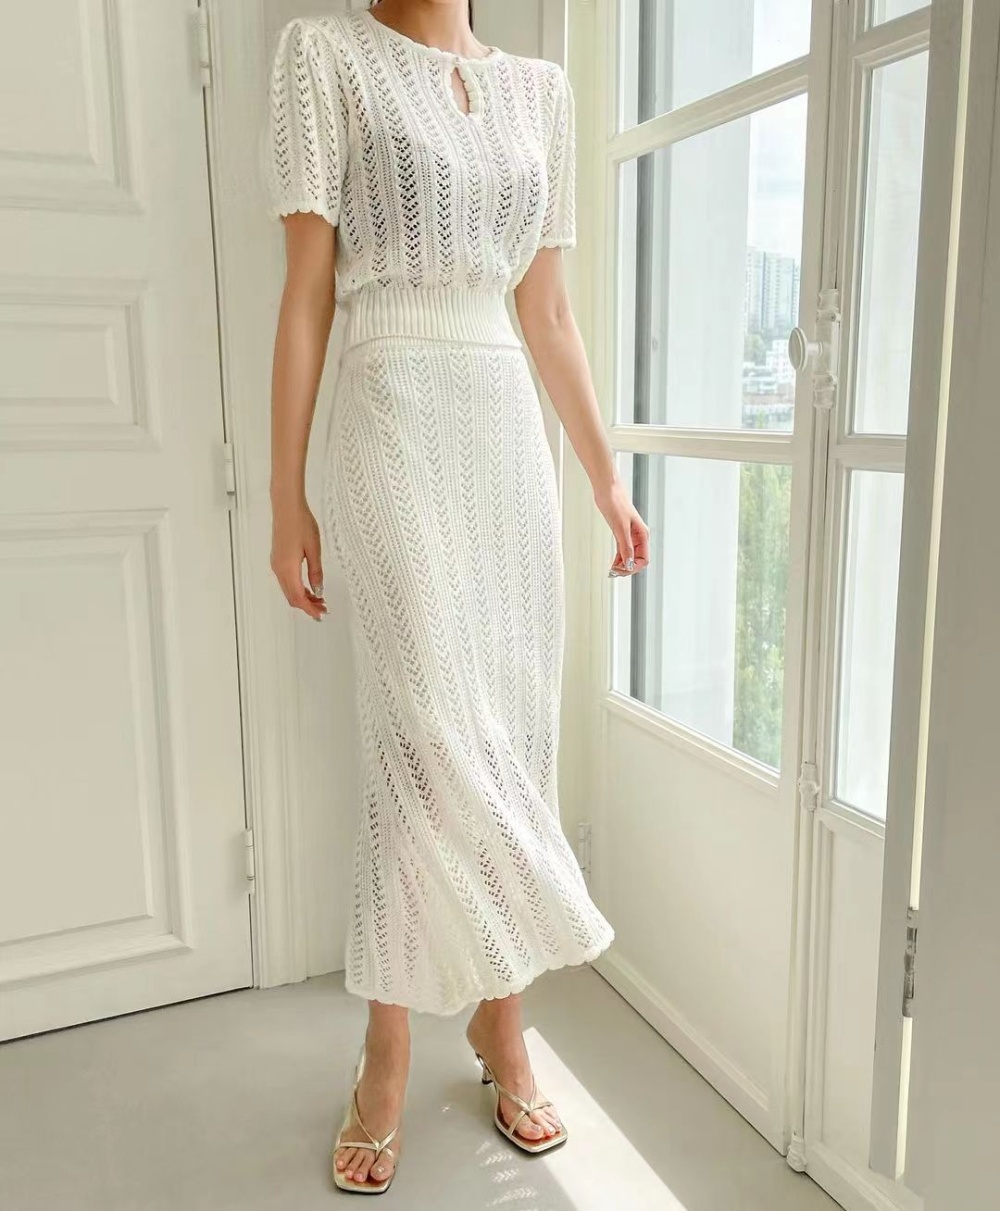 Fashion Korean style tops jacquard skirt a set